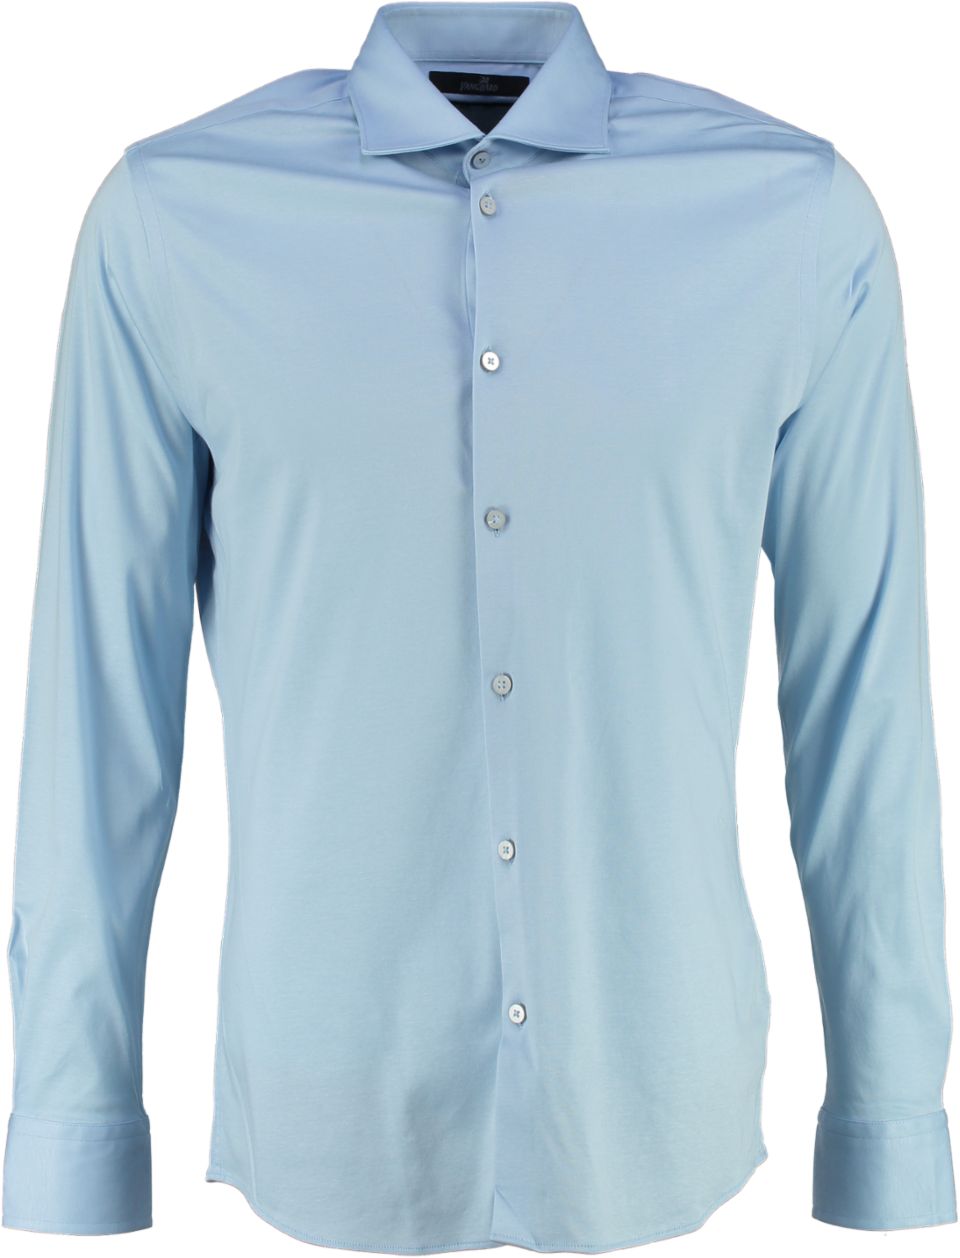 VanGuard Casual Shirt Long Sleeve Shirt 